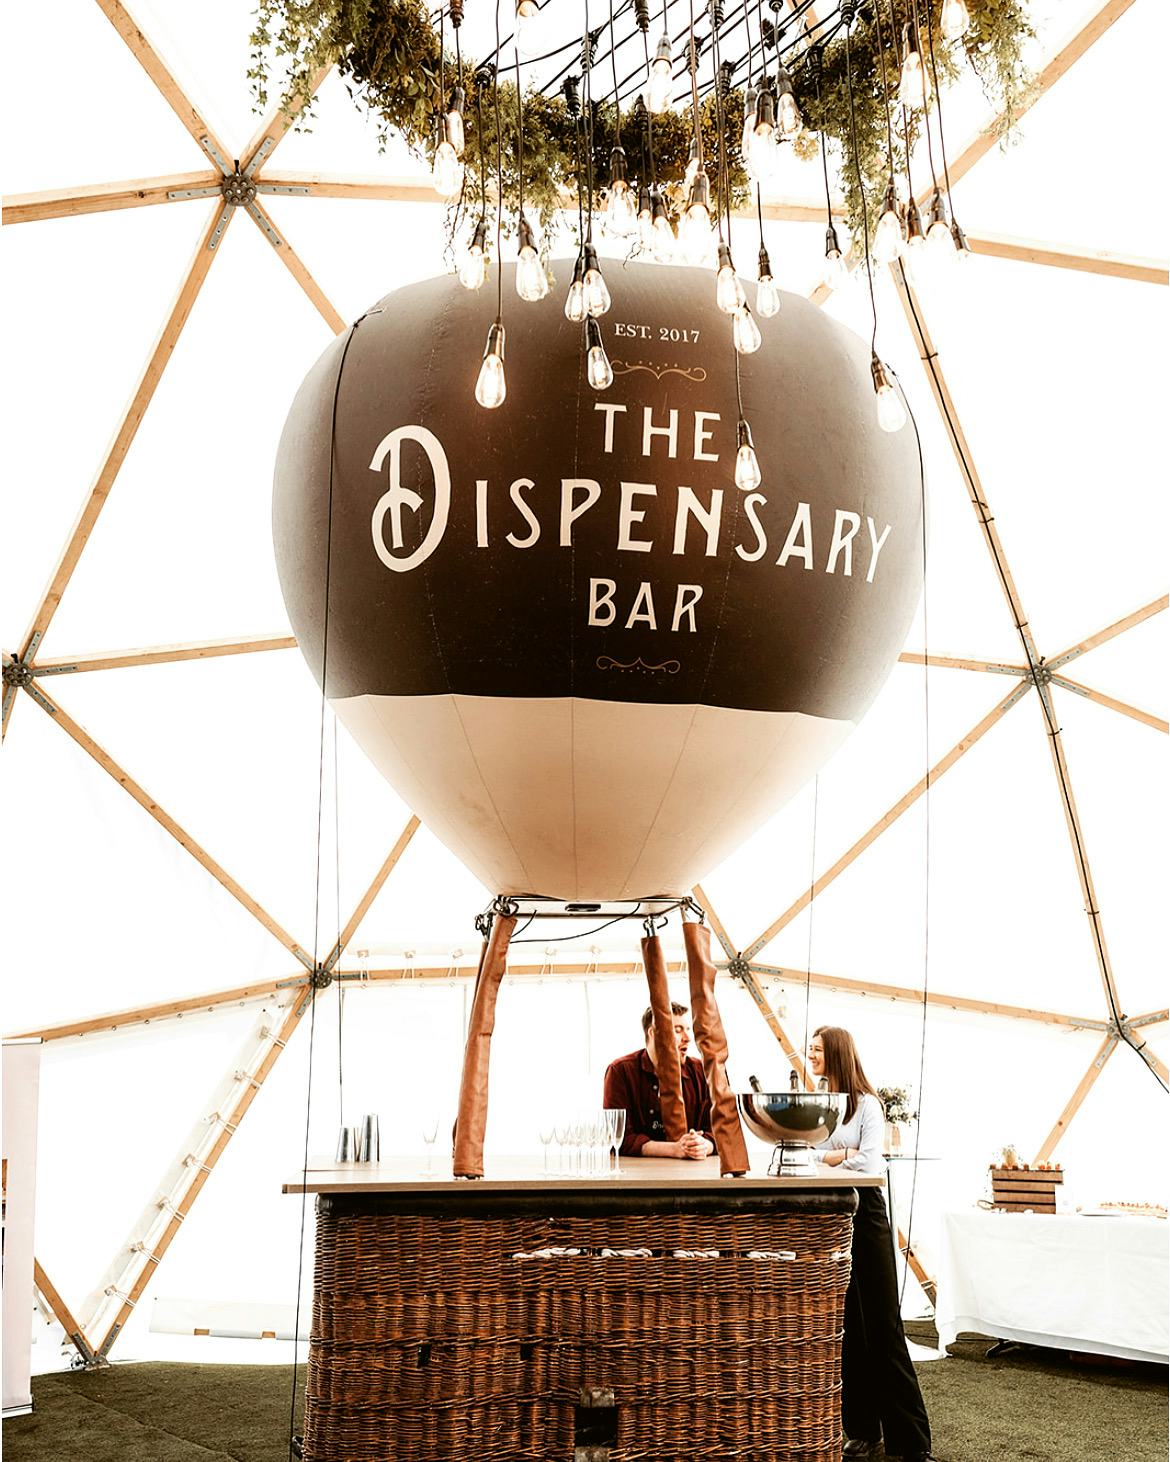 The Dispensary Bar